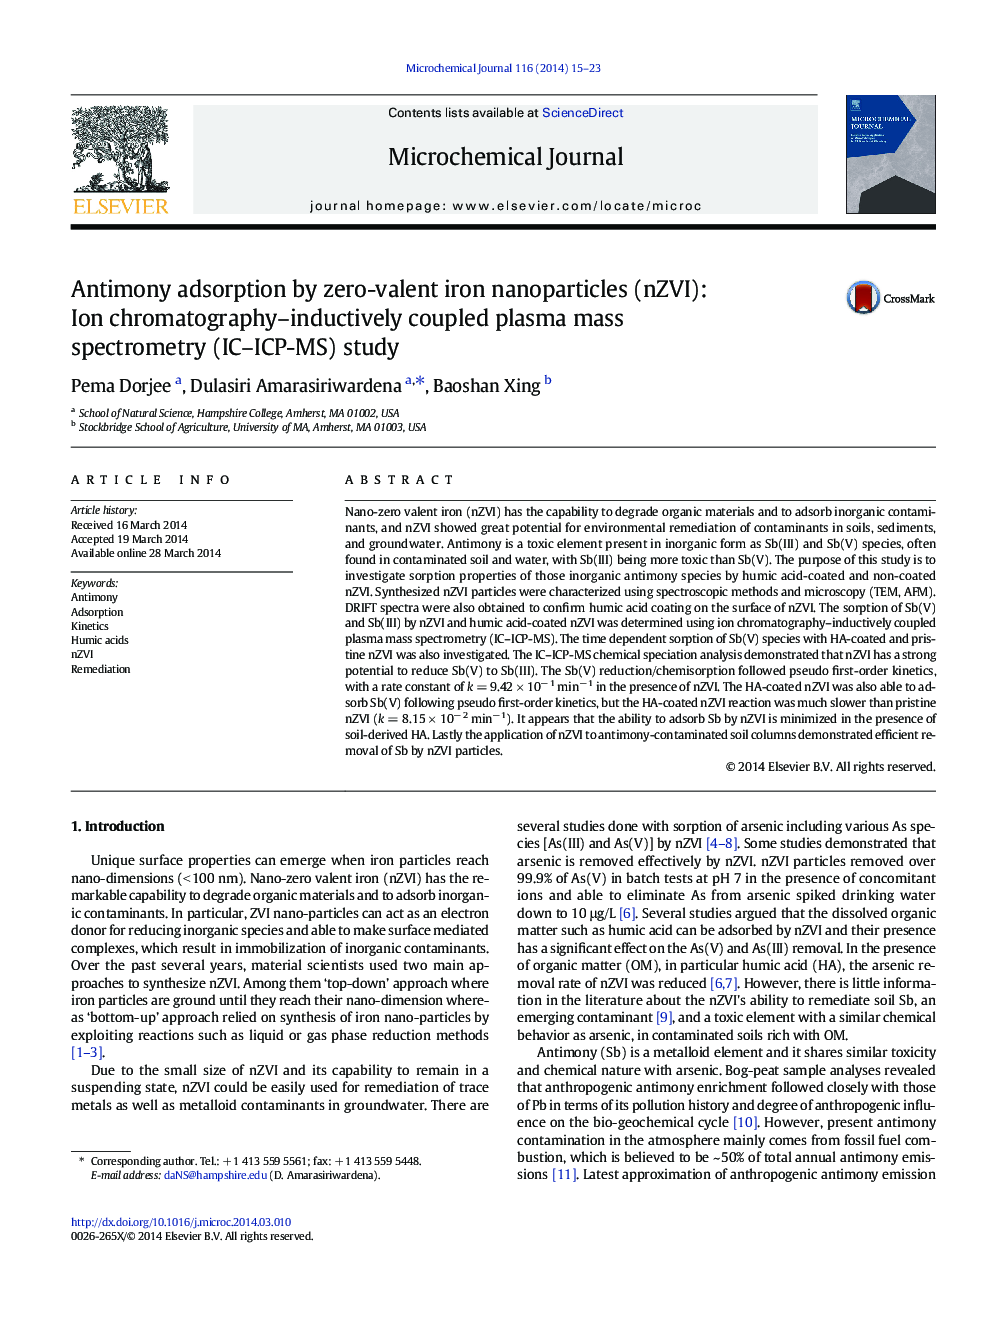 Antimony adsorption by zero-valent iron nanoparticles (nZVI): Ion chromatography-inductively coupled plasma mass spectrometry (IC-ICP-MS) study